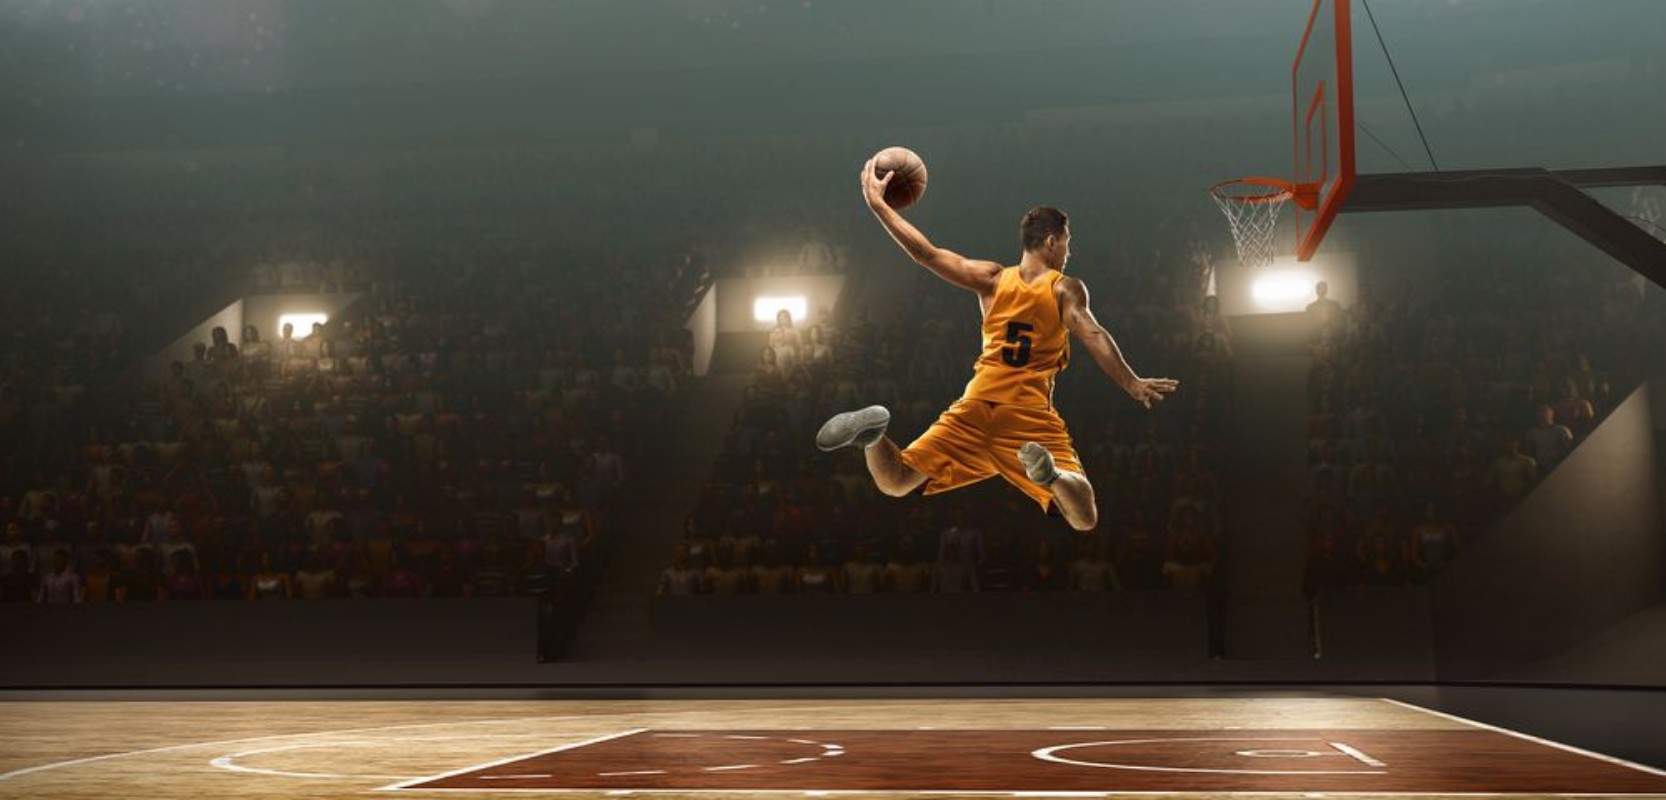 Image de Basketball player on basketball court in action Slam dunk Jump shot